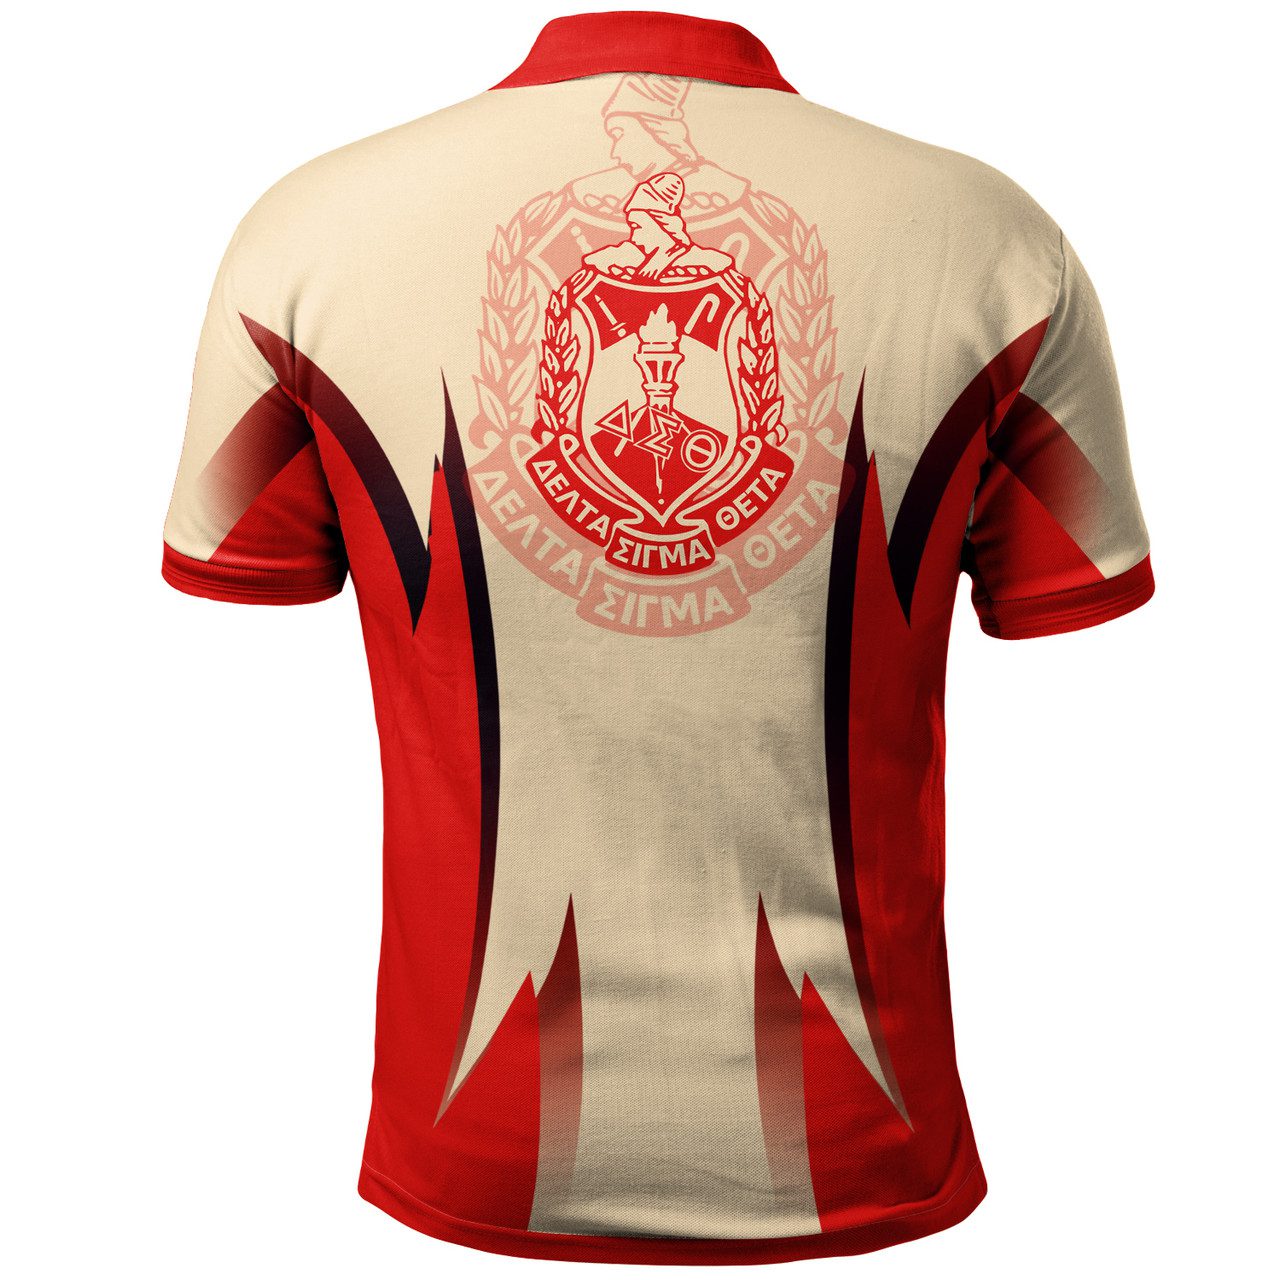 Delta Sigma Theta Polo Shirt – Sorority Limited Version Polo Shirt